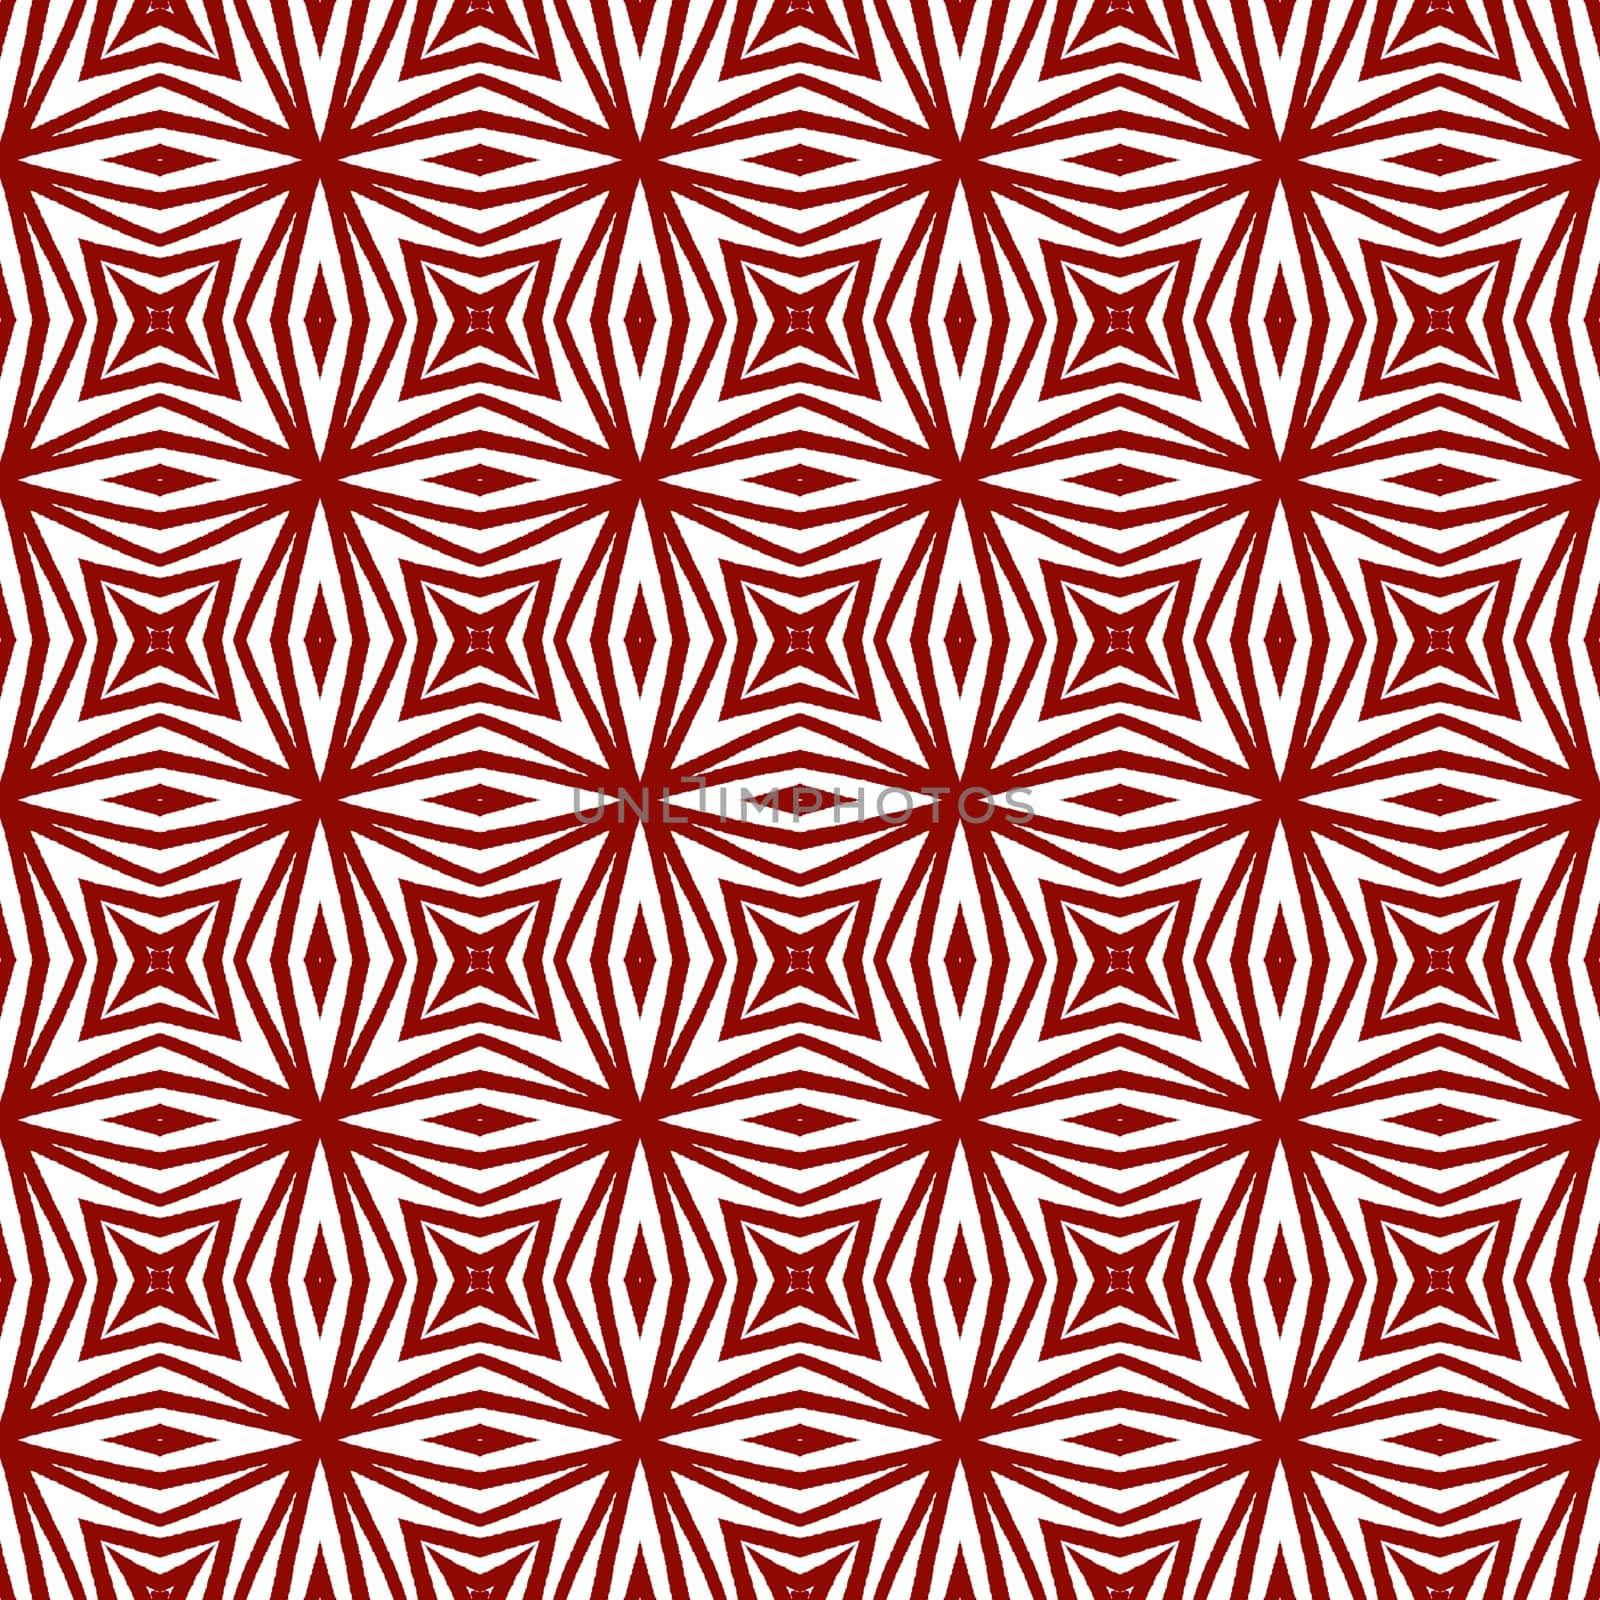 Arabesque hand drawn pattern. Maroon symmetrical by beginagain